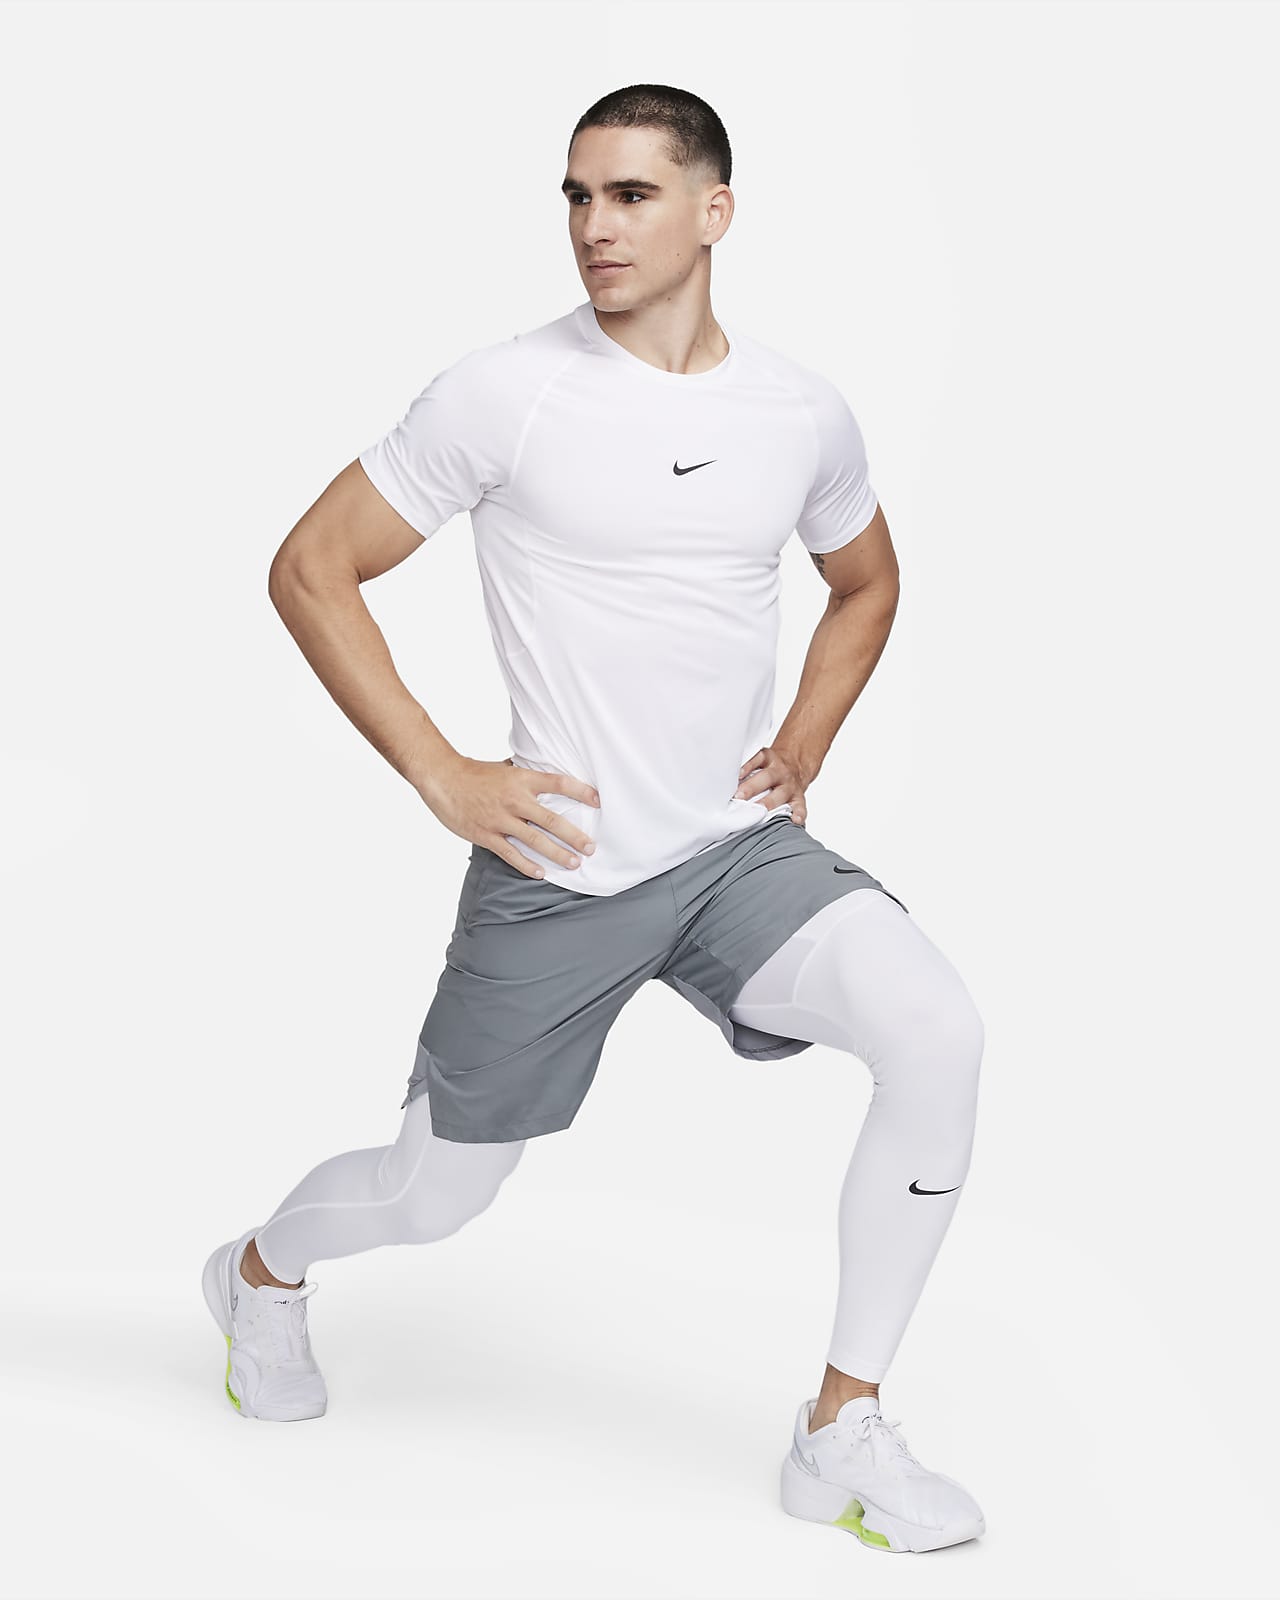 Nike Pro Combat compression leggings Mens Gray baselayer warm XL L M sizes